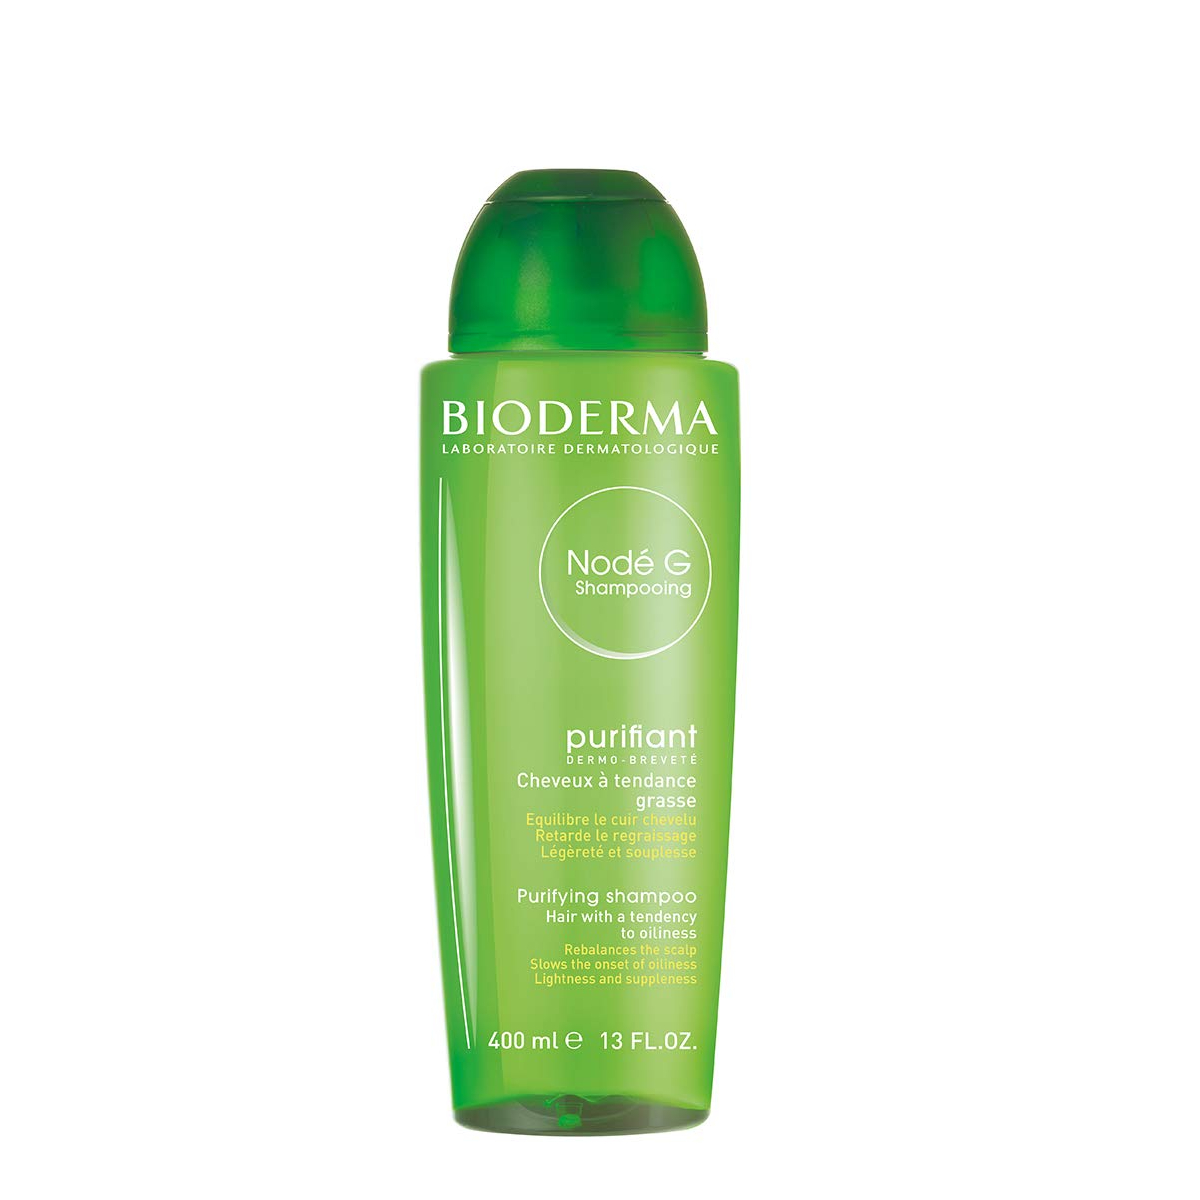 Bioderma Node G Purifying Shampoo - 400ml